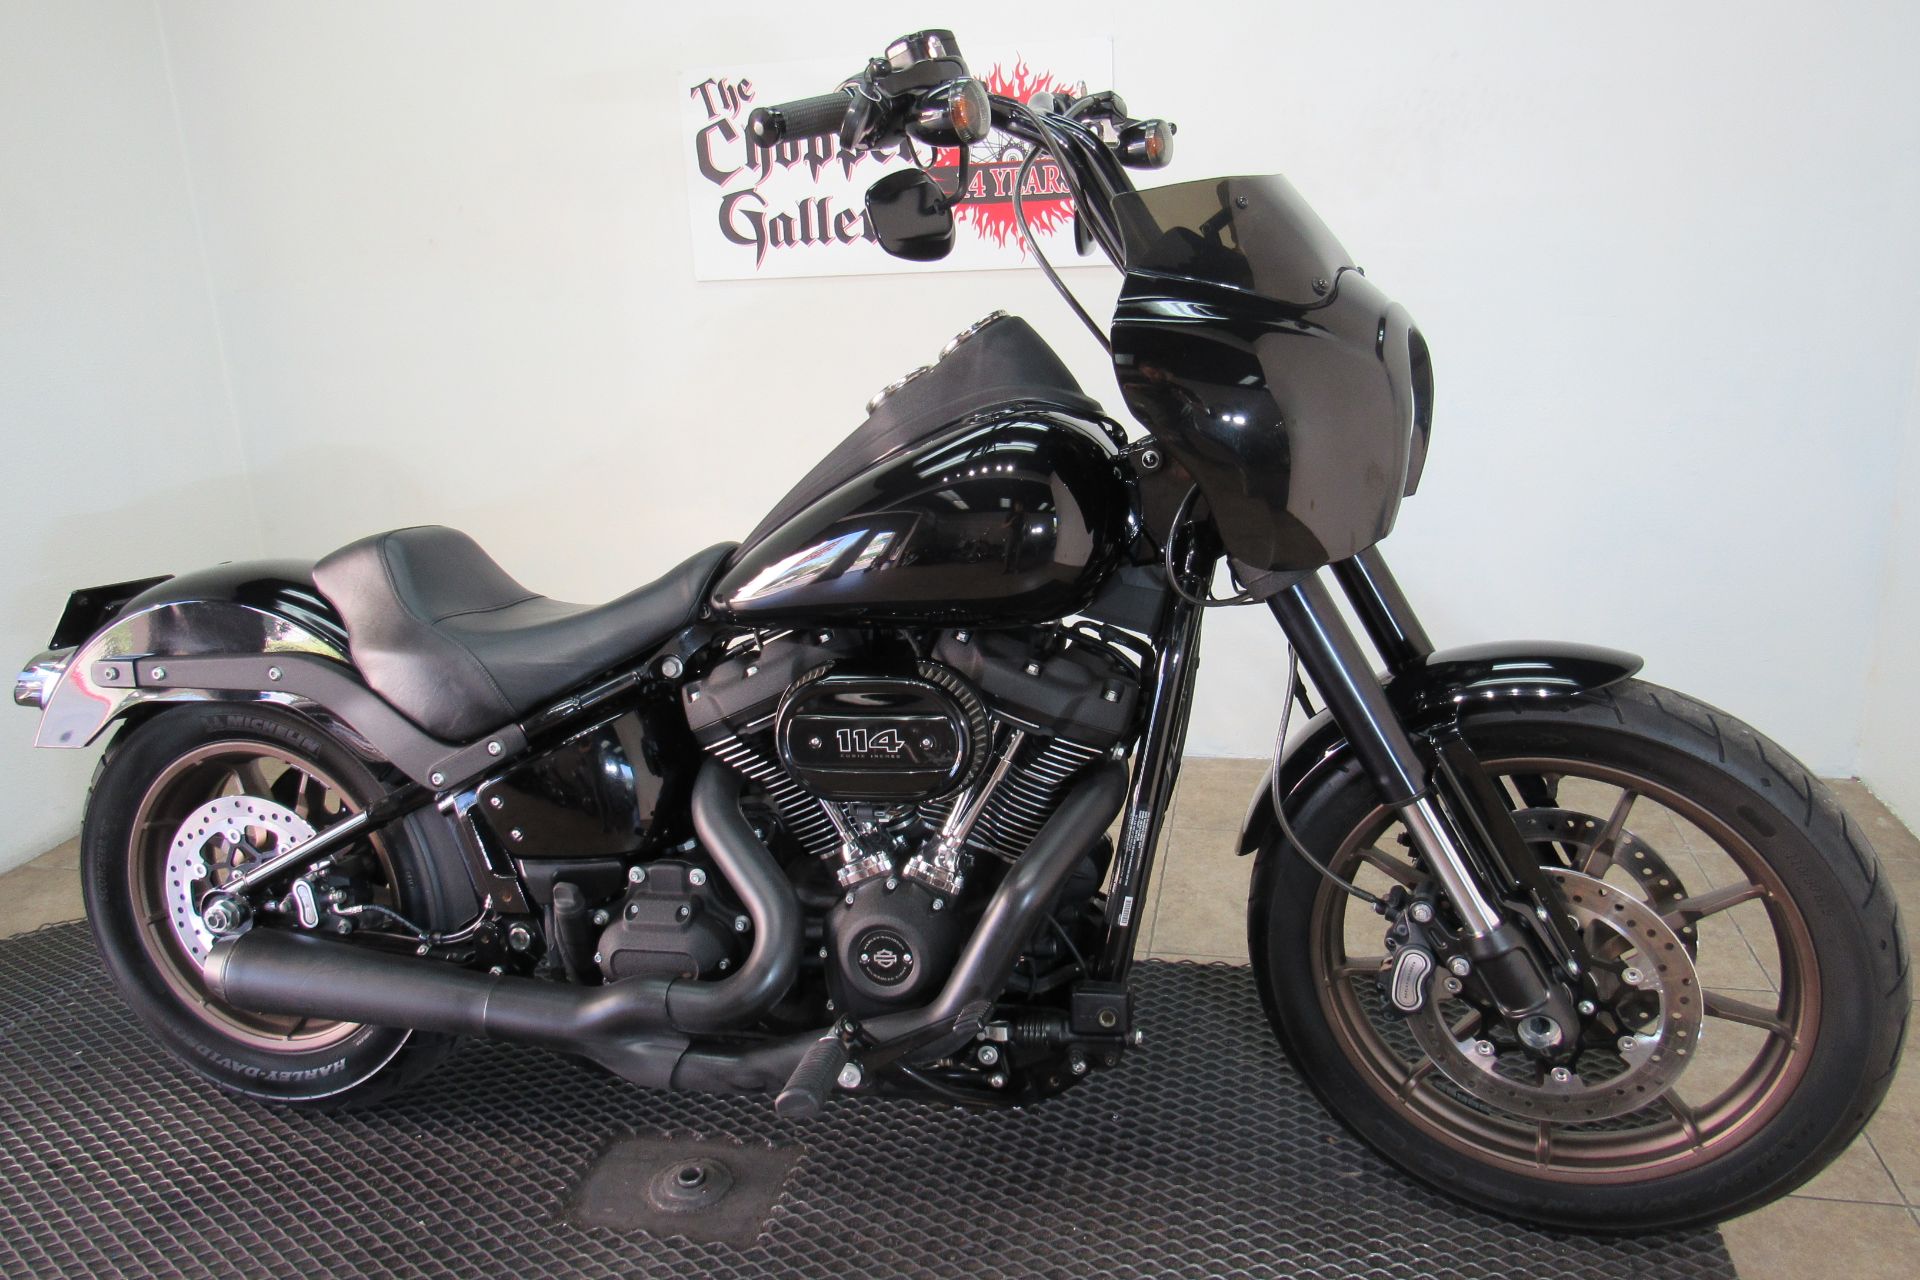 2020 Harley-Davidson Low Rider®S in Temecula, California - Photo 3